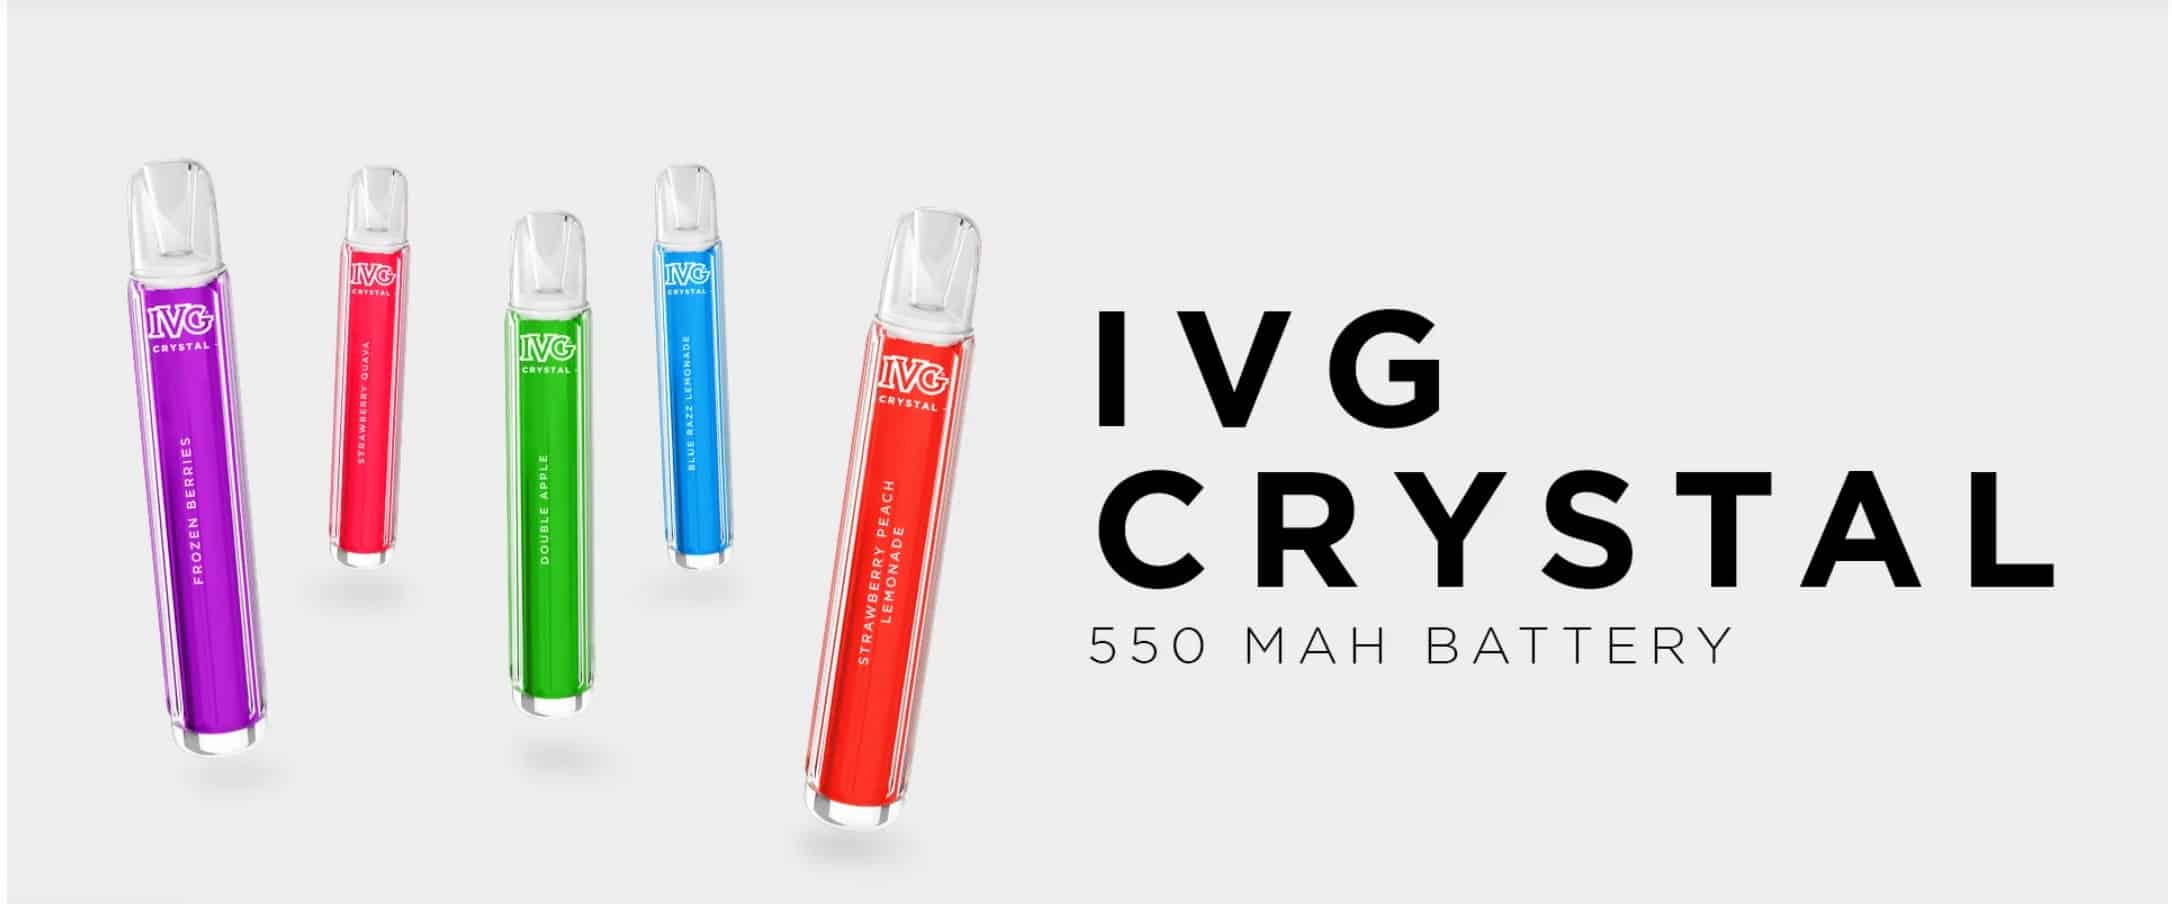 ivg crystal bar image battery